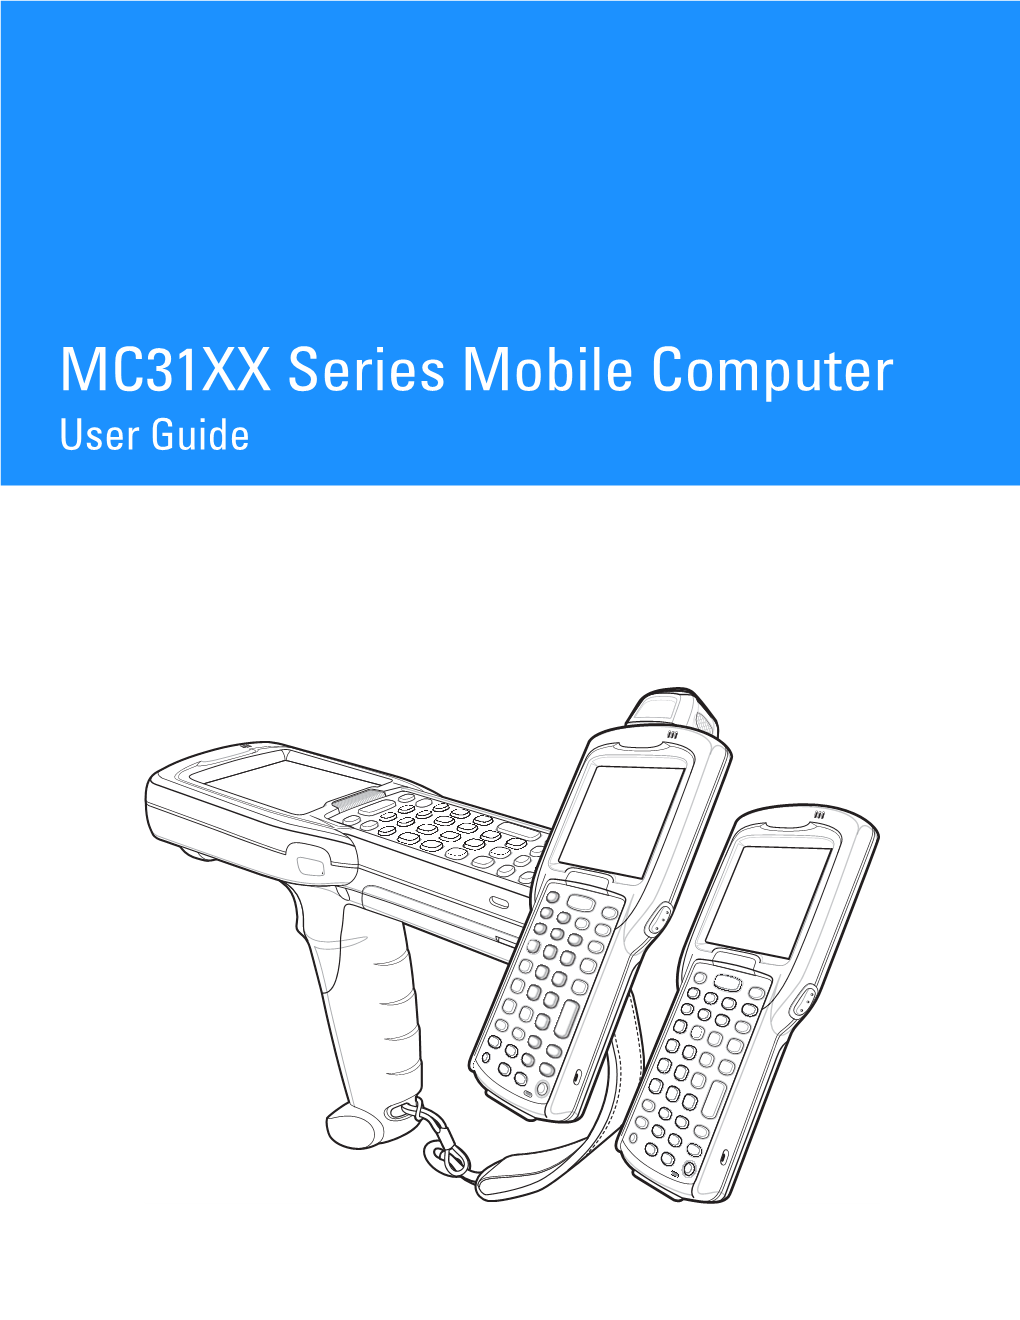 MC31XX Series Mobile Computer User Guide